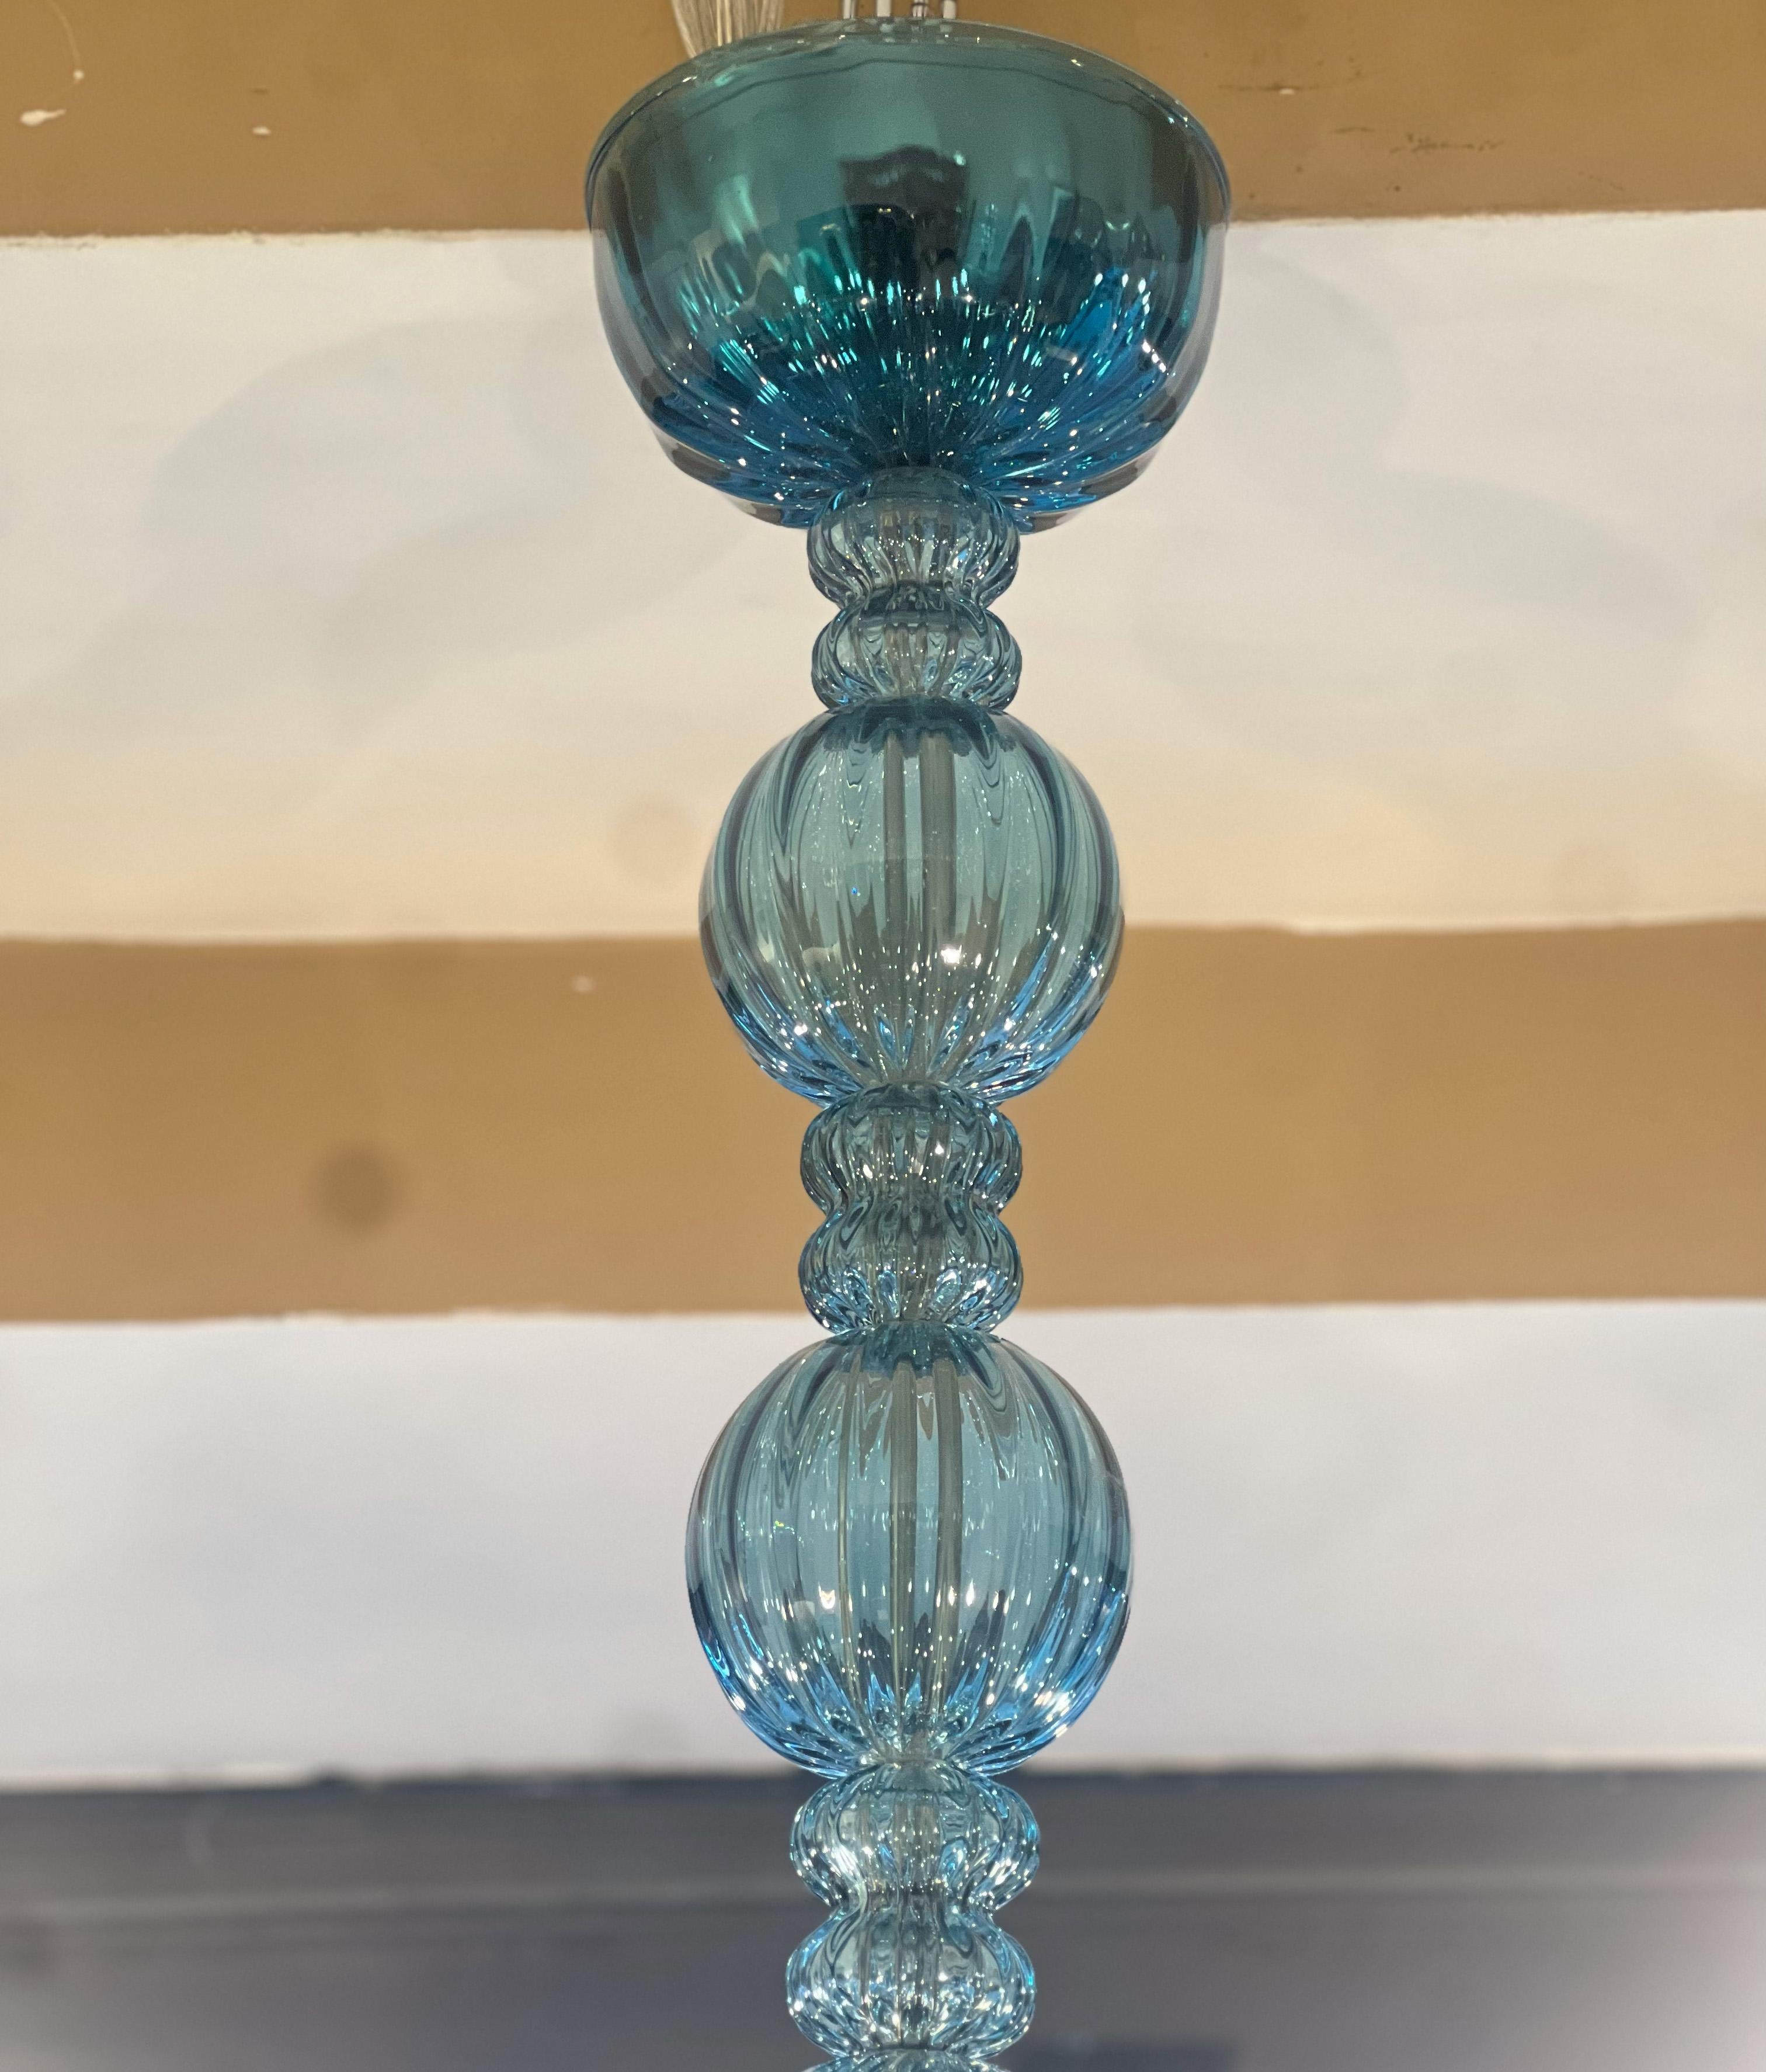 A circa 1960’s Italian blown glass chandelier with 12 lights.

Measurements:
Diameter: 45”
Current drop: 38” (adjustable)